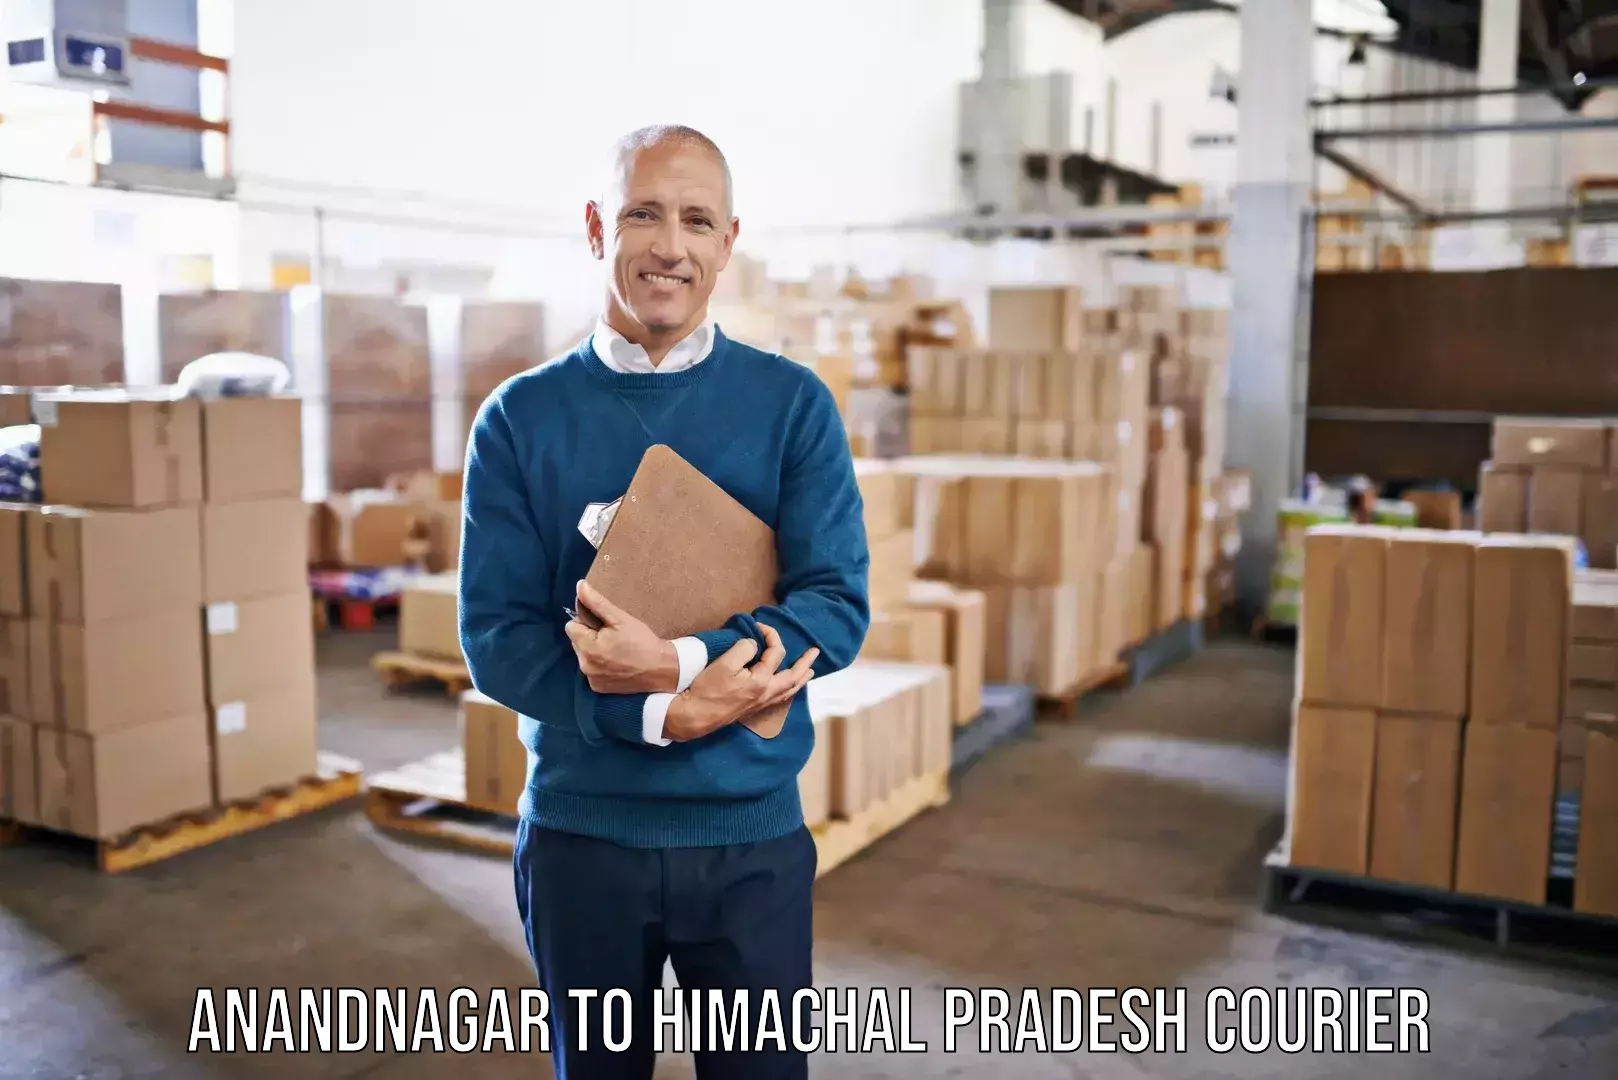 Professional moving company Anandnagar to Himachal Pradesh